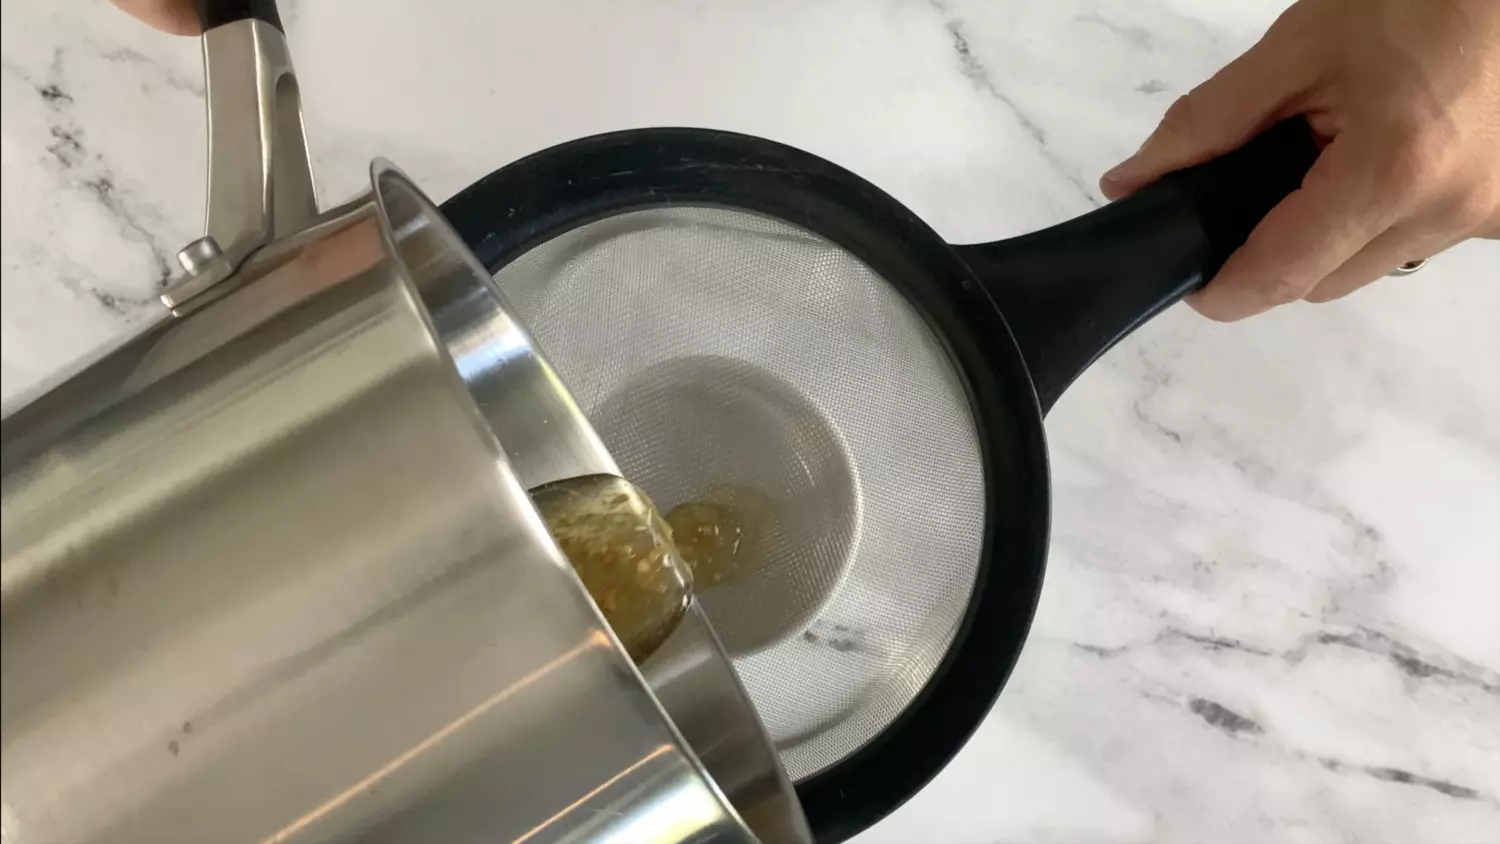 Strain aromatic oils into a small bowl